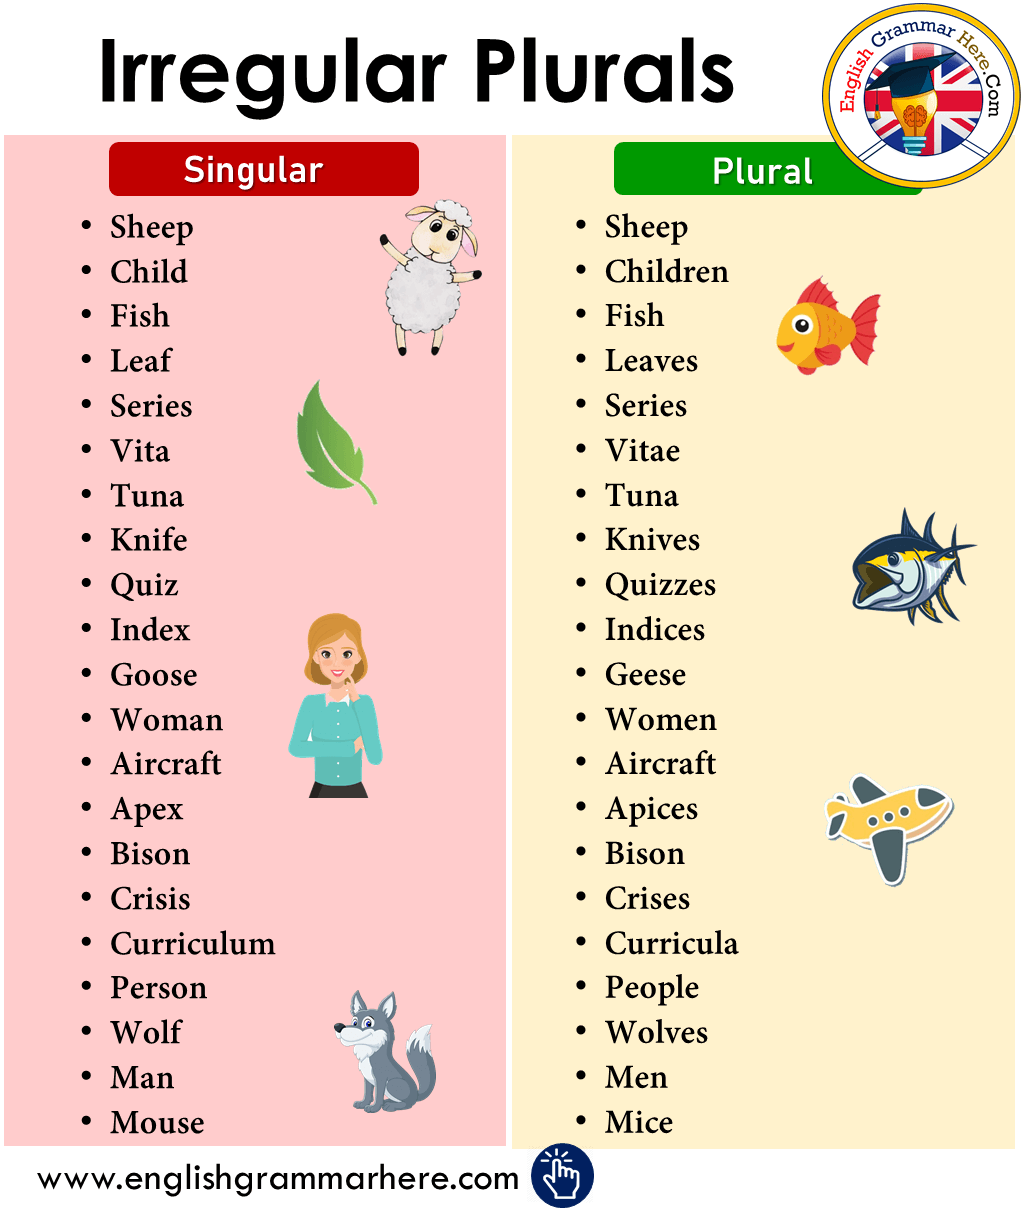 A Quiz Game for Plurals - Plural Nouns in Sentences